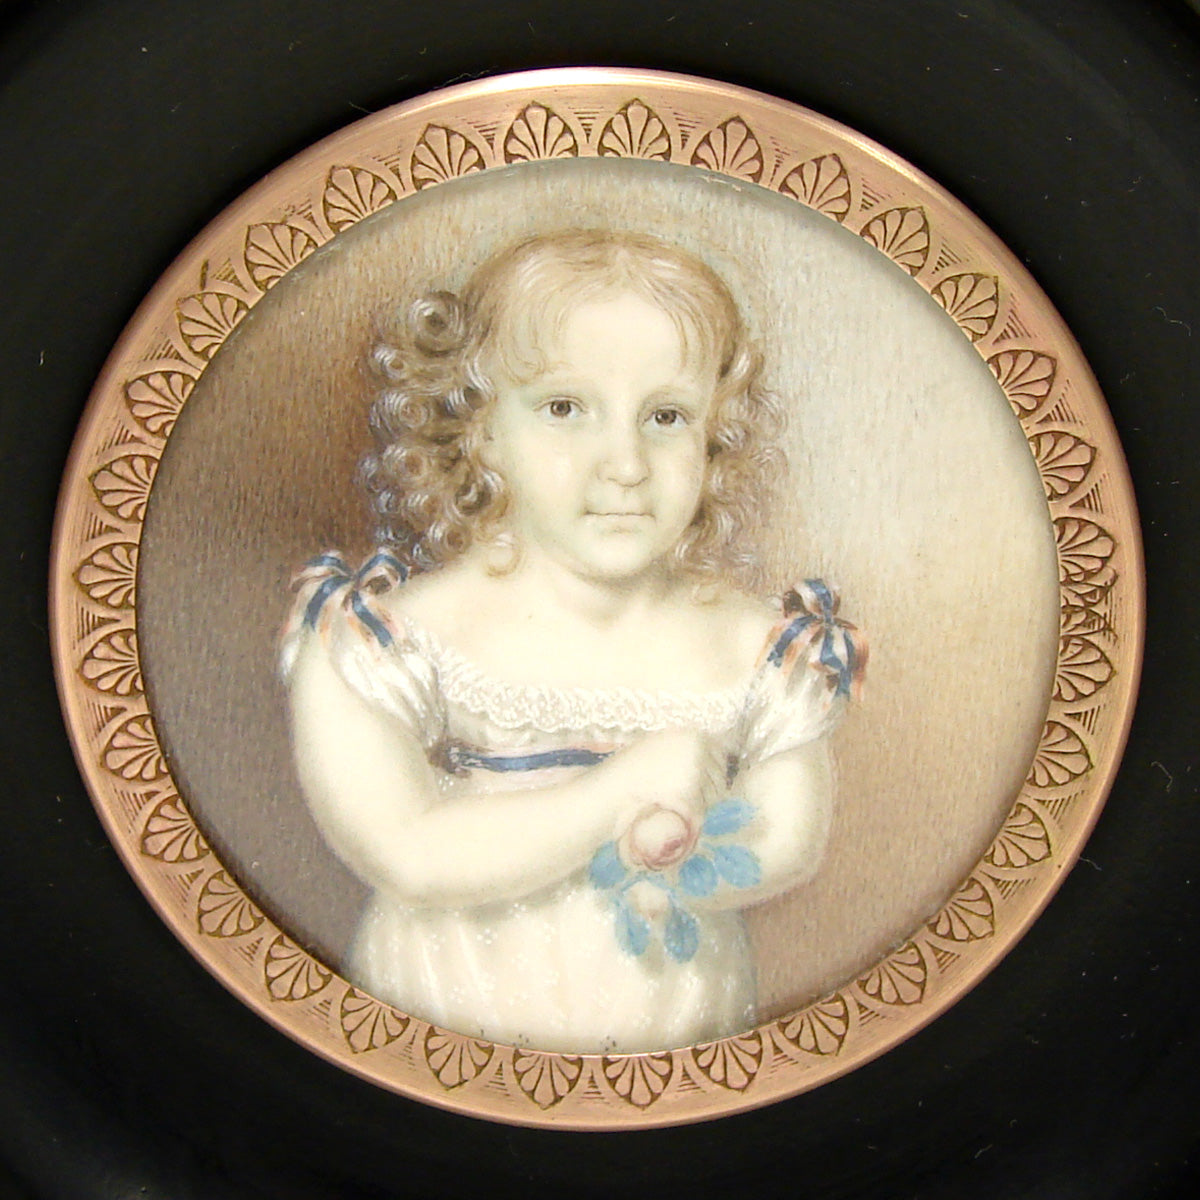 RARE Antique French Empire Era Portrait Miniature of a Dwarf, Not a Child, c.1800